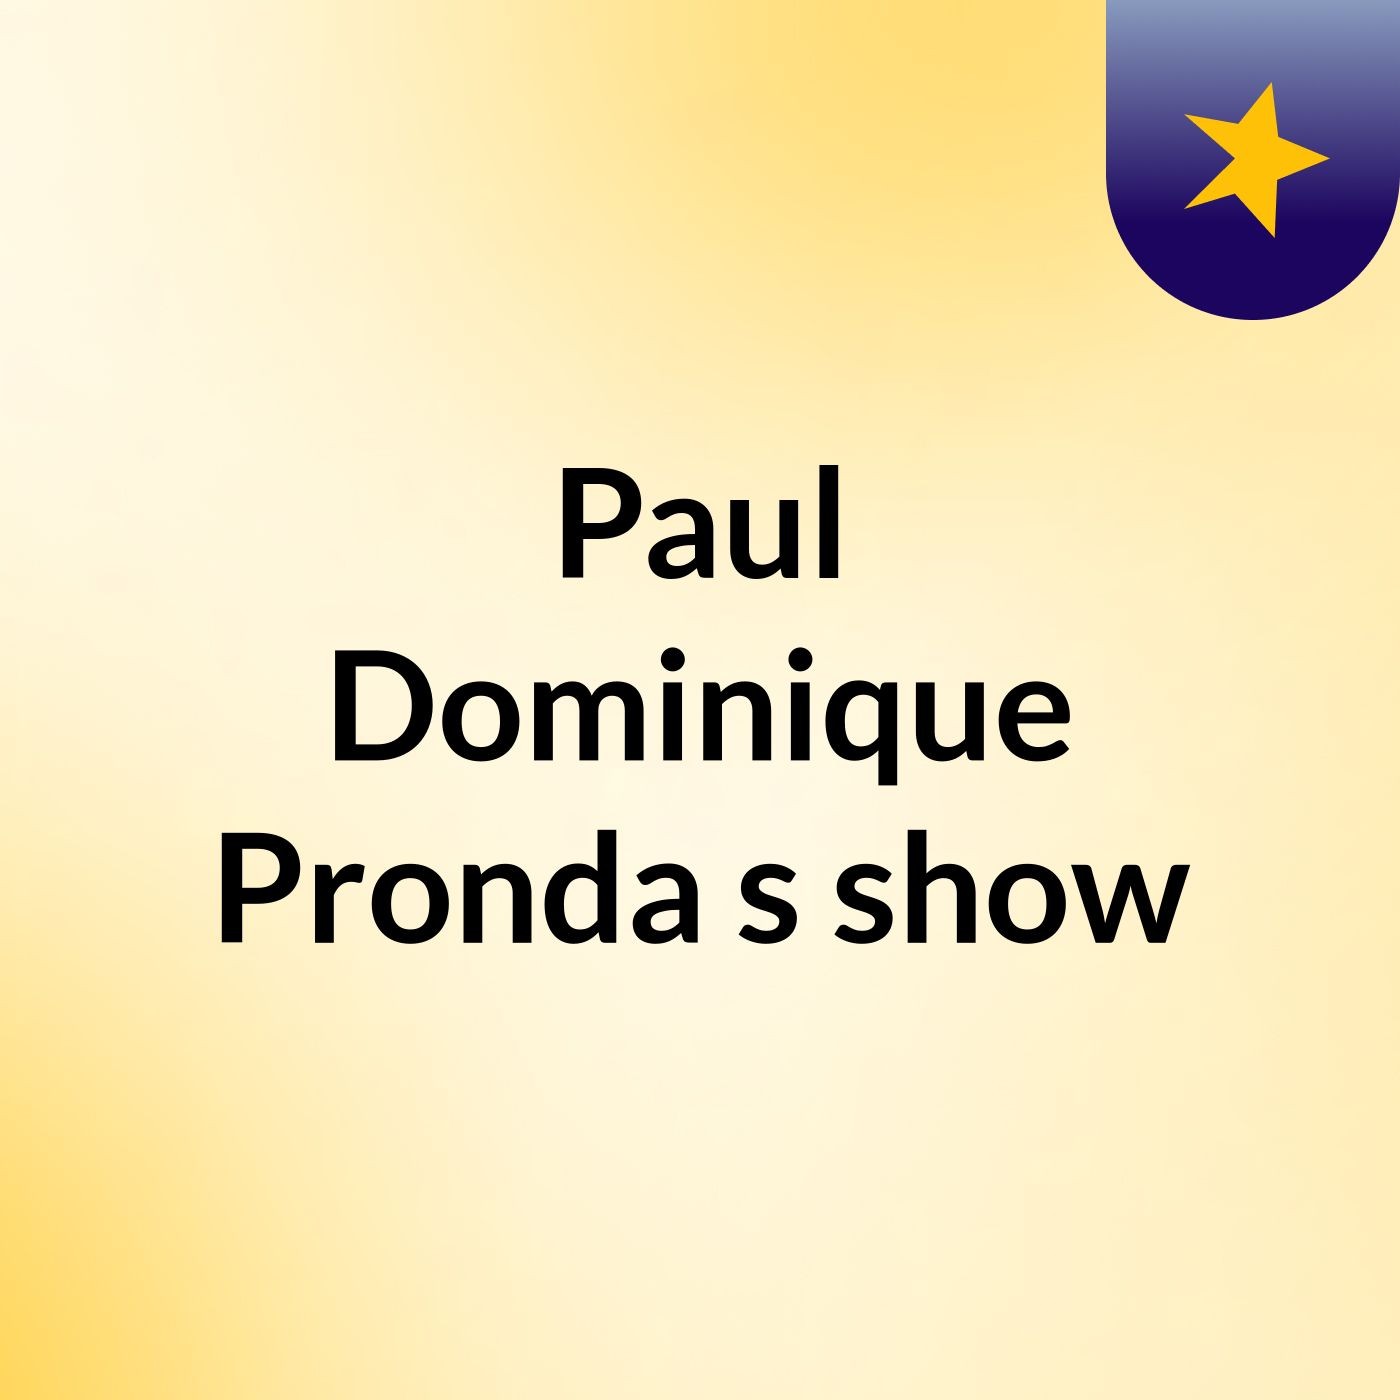 Paul Dominique Pronda's show